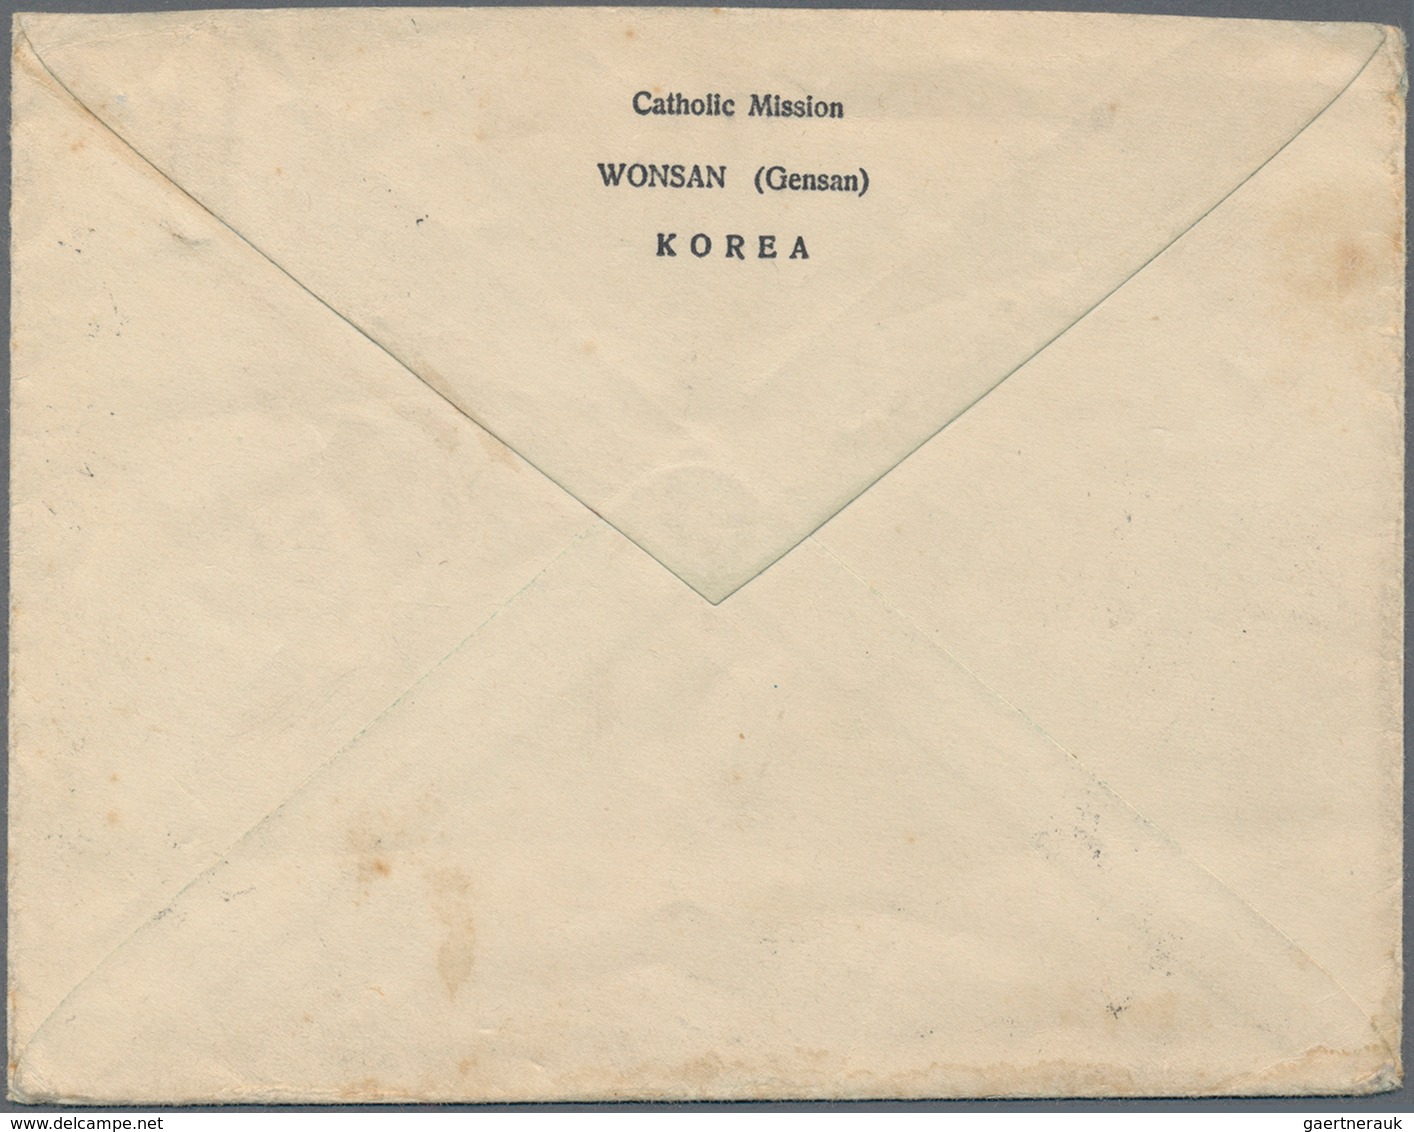 Japanische Post In Korea: 1930/33, Catholic Mission Wonsan/Korea: Cover W. Two Cpl. Commemorative Se - Militärpostmarken